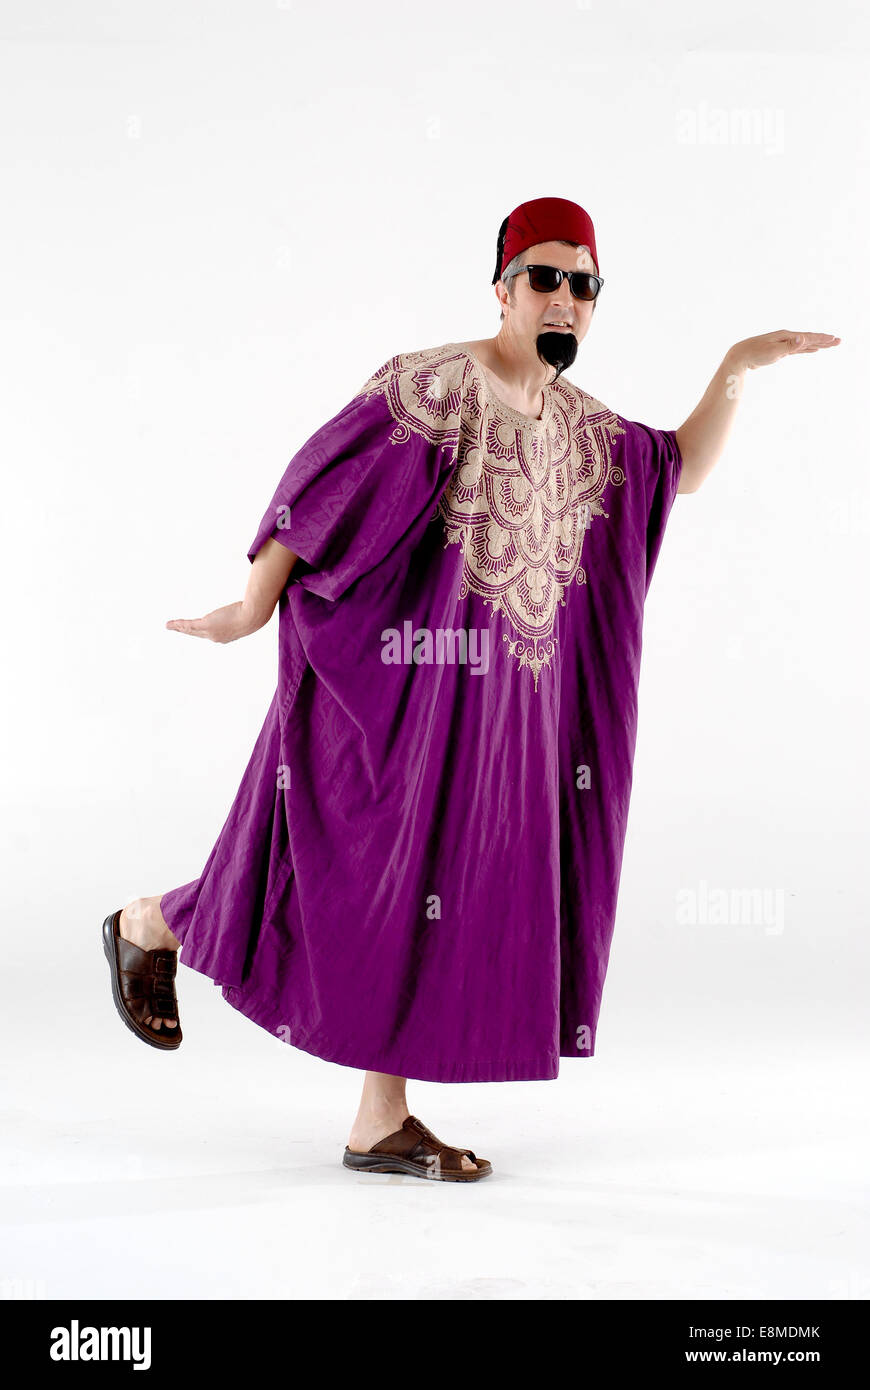 L'uomo in bagno turco / Middle Eastern fancy dress costume commedia  divertente in posa con fez hat Foto stock - Alamy